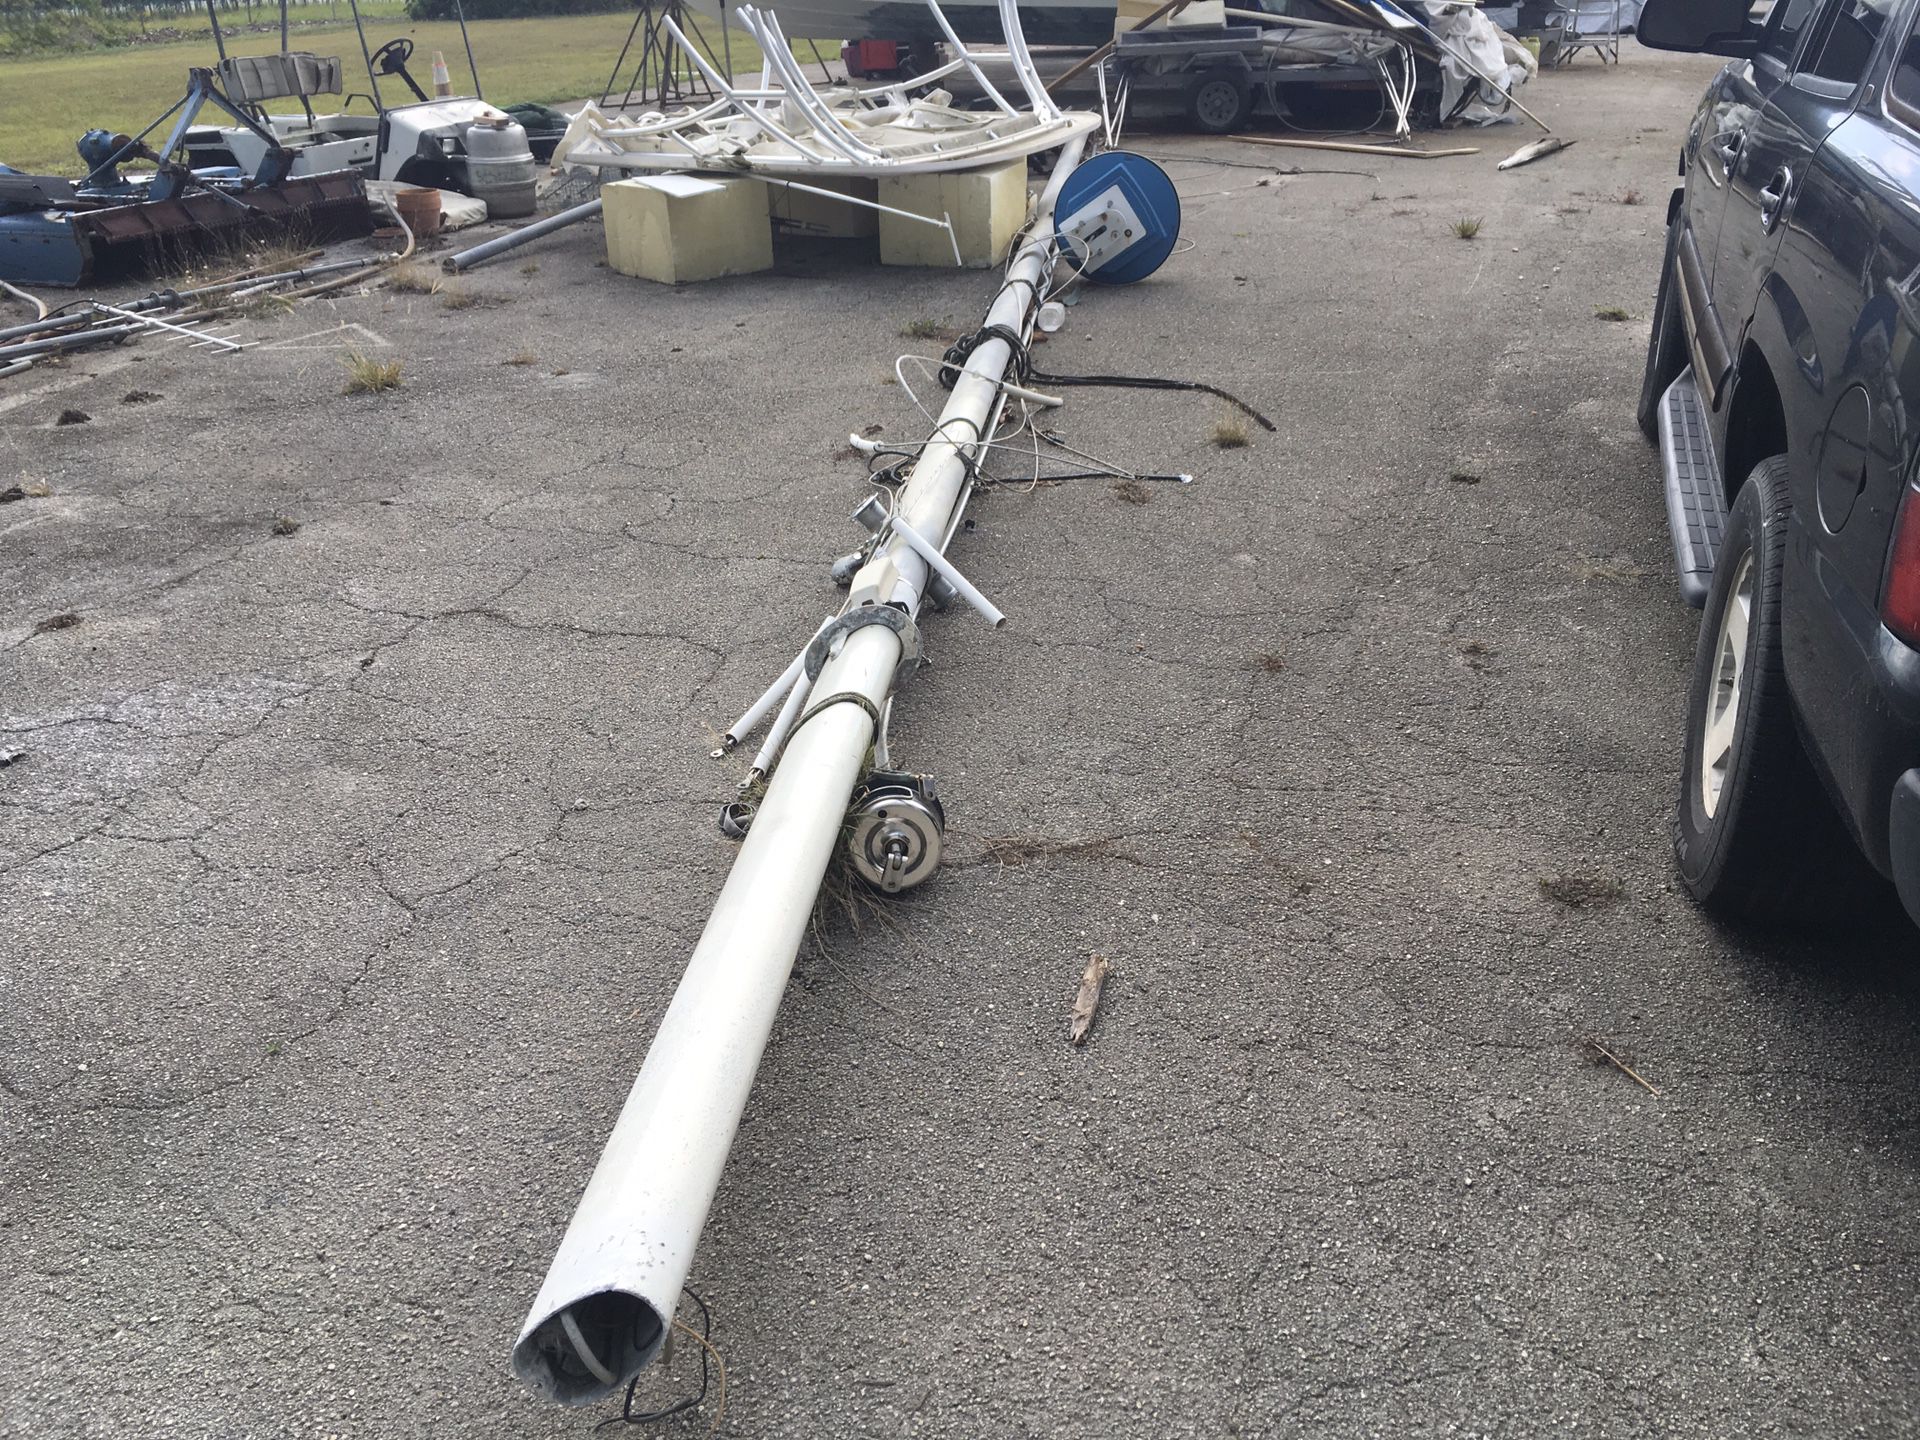 Sale boat mast 45’ aluminum with rigging